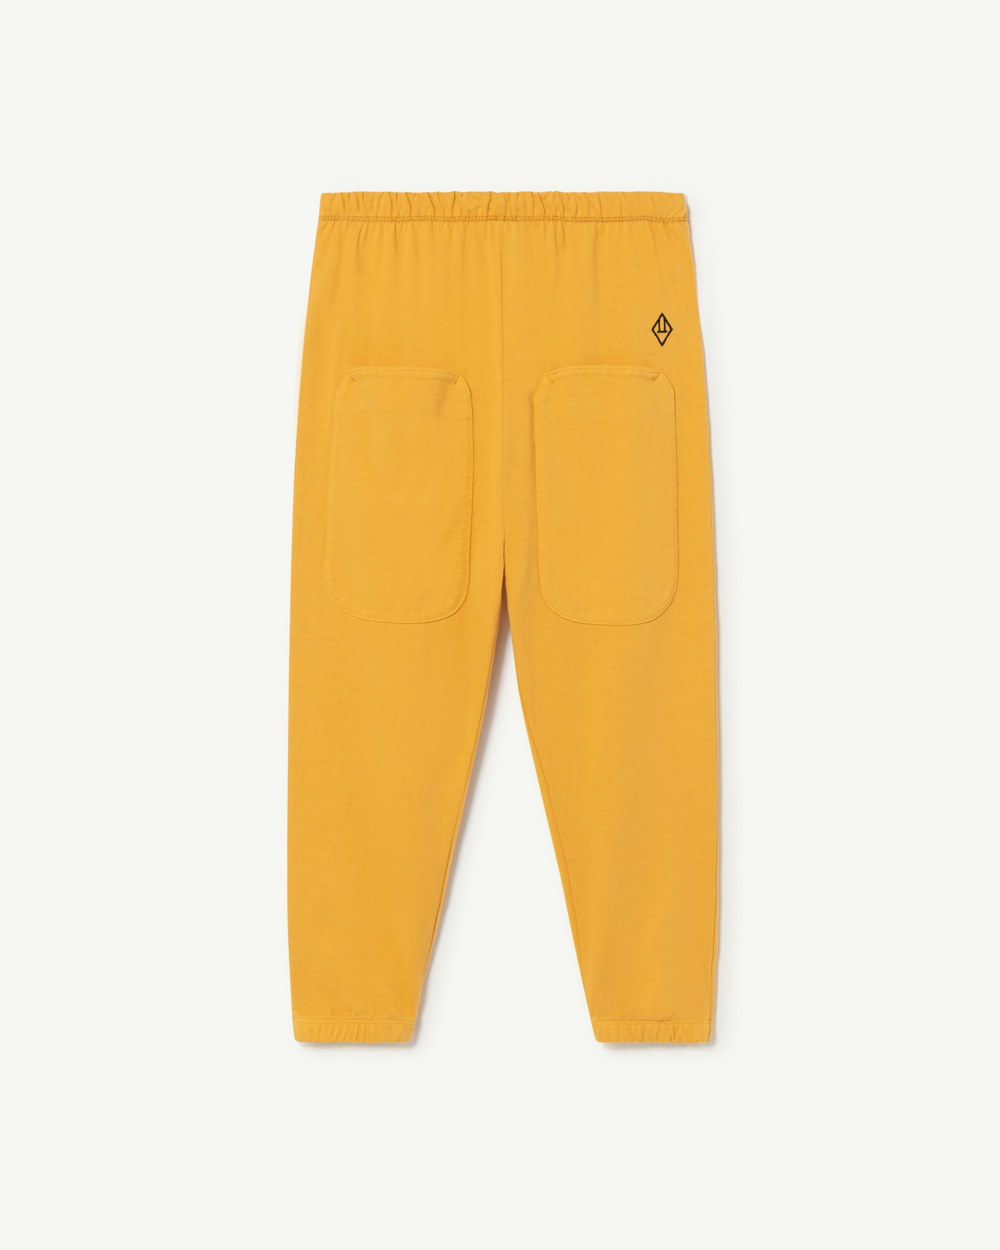 [TAO]F22019-278_CE /EAGLE KIDS PANTS Yellow_Logo [10Y]